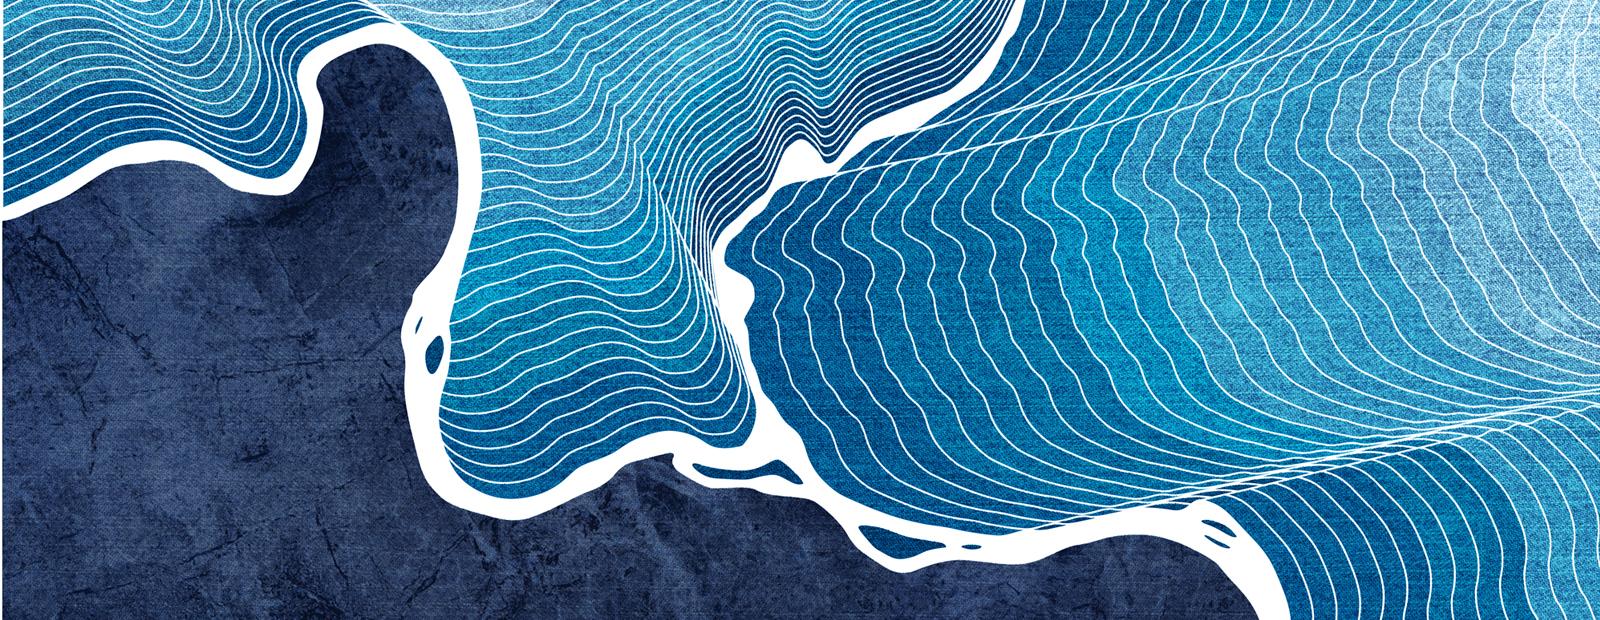 Common Waters, Julia Nakanishi and Tony Kogan, 2019